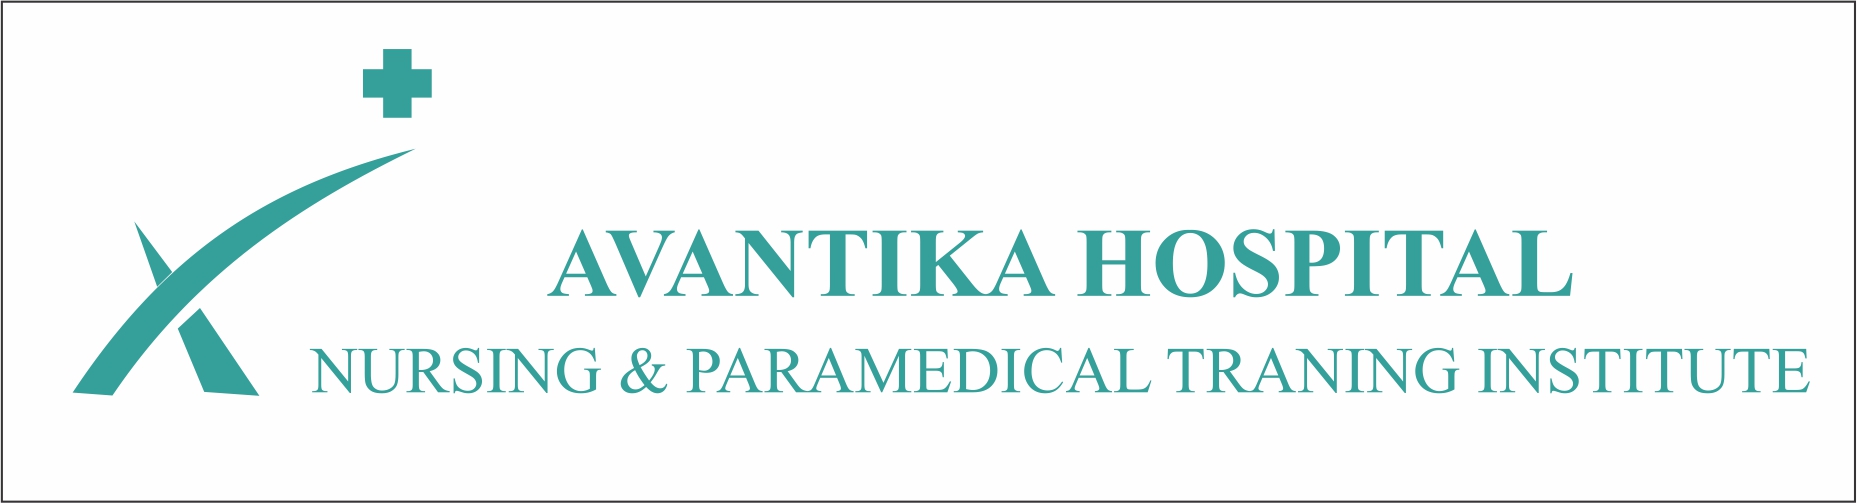 Avantika Multispeciality Hospital|Diagnostic centre|Medical Services